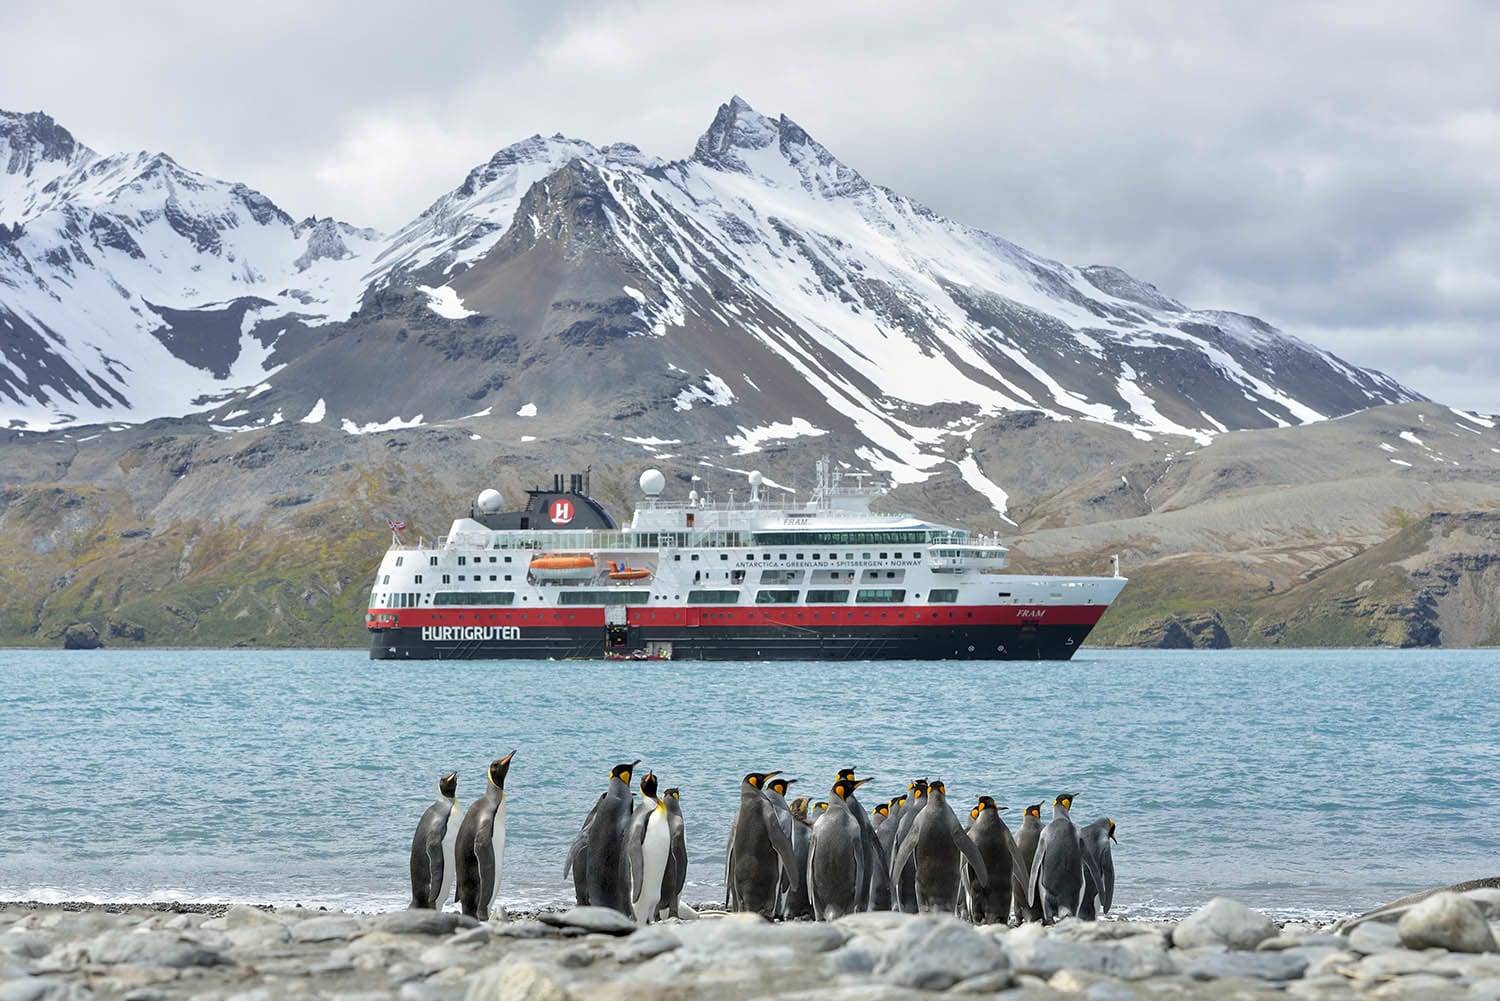 expedition antarctica cruise